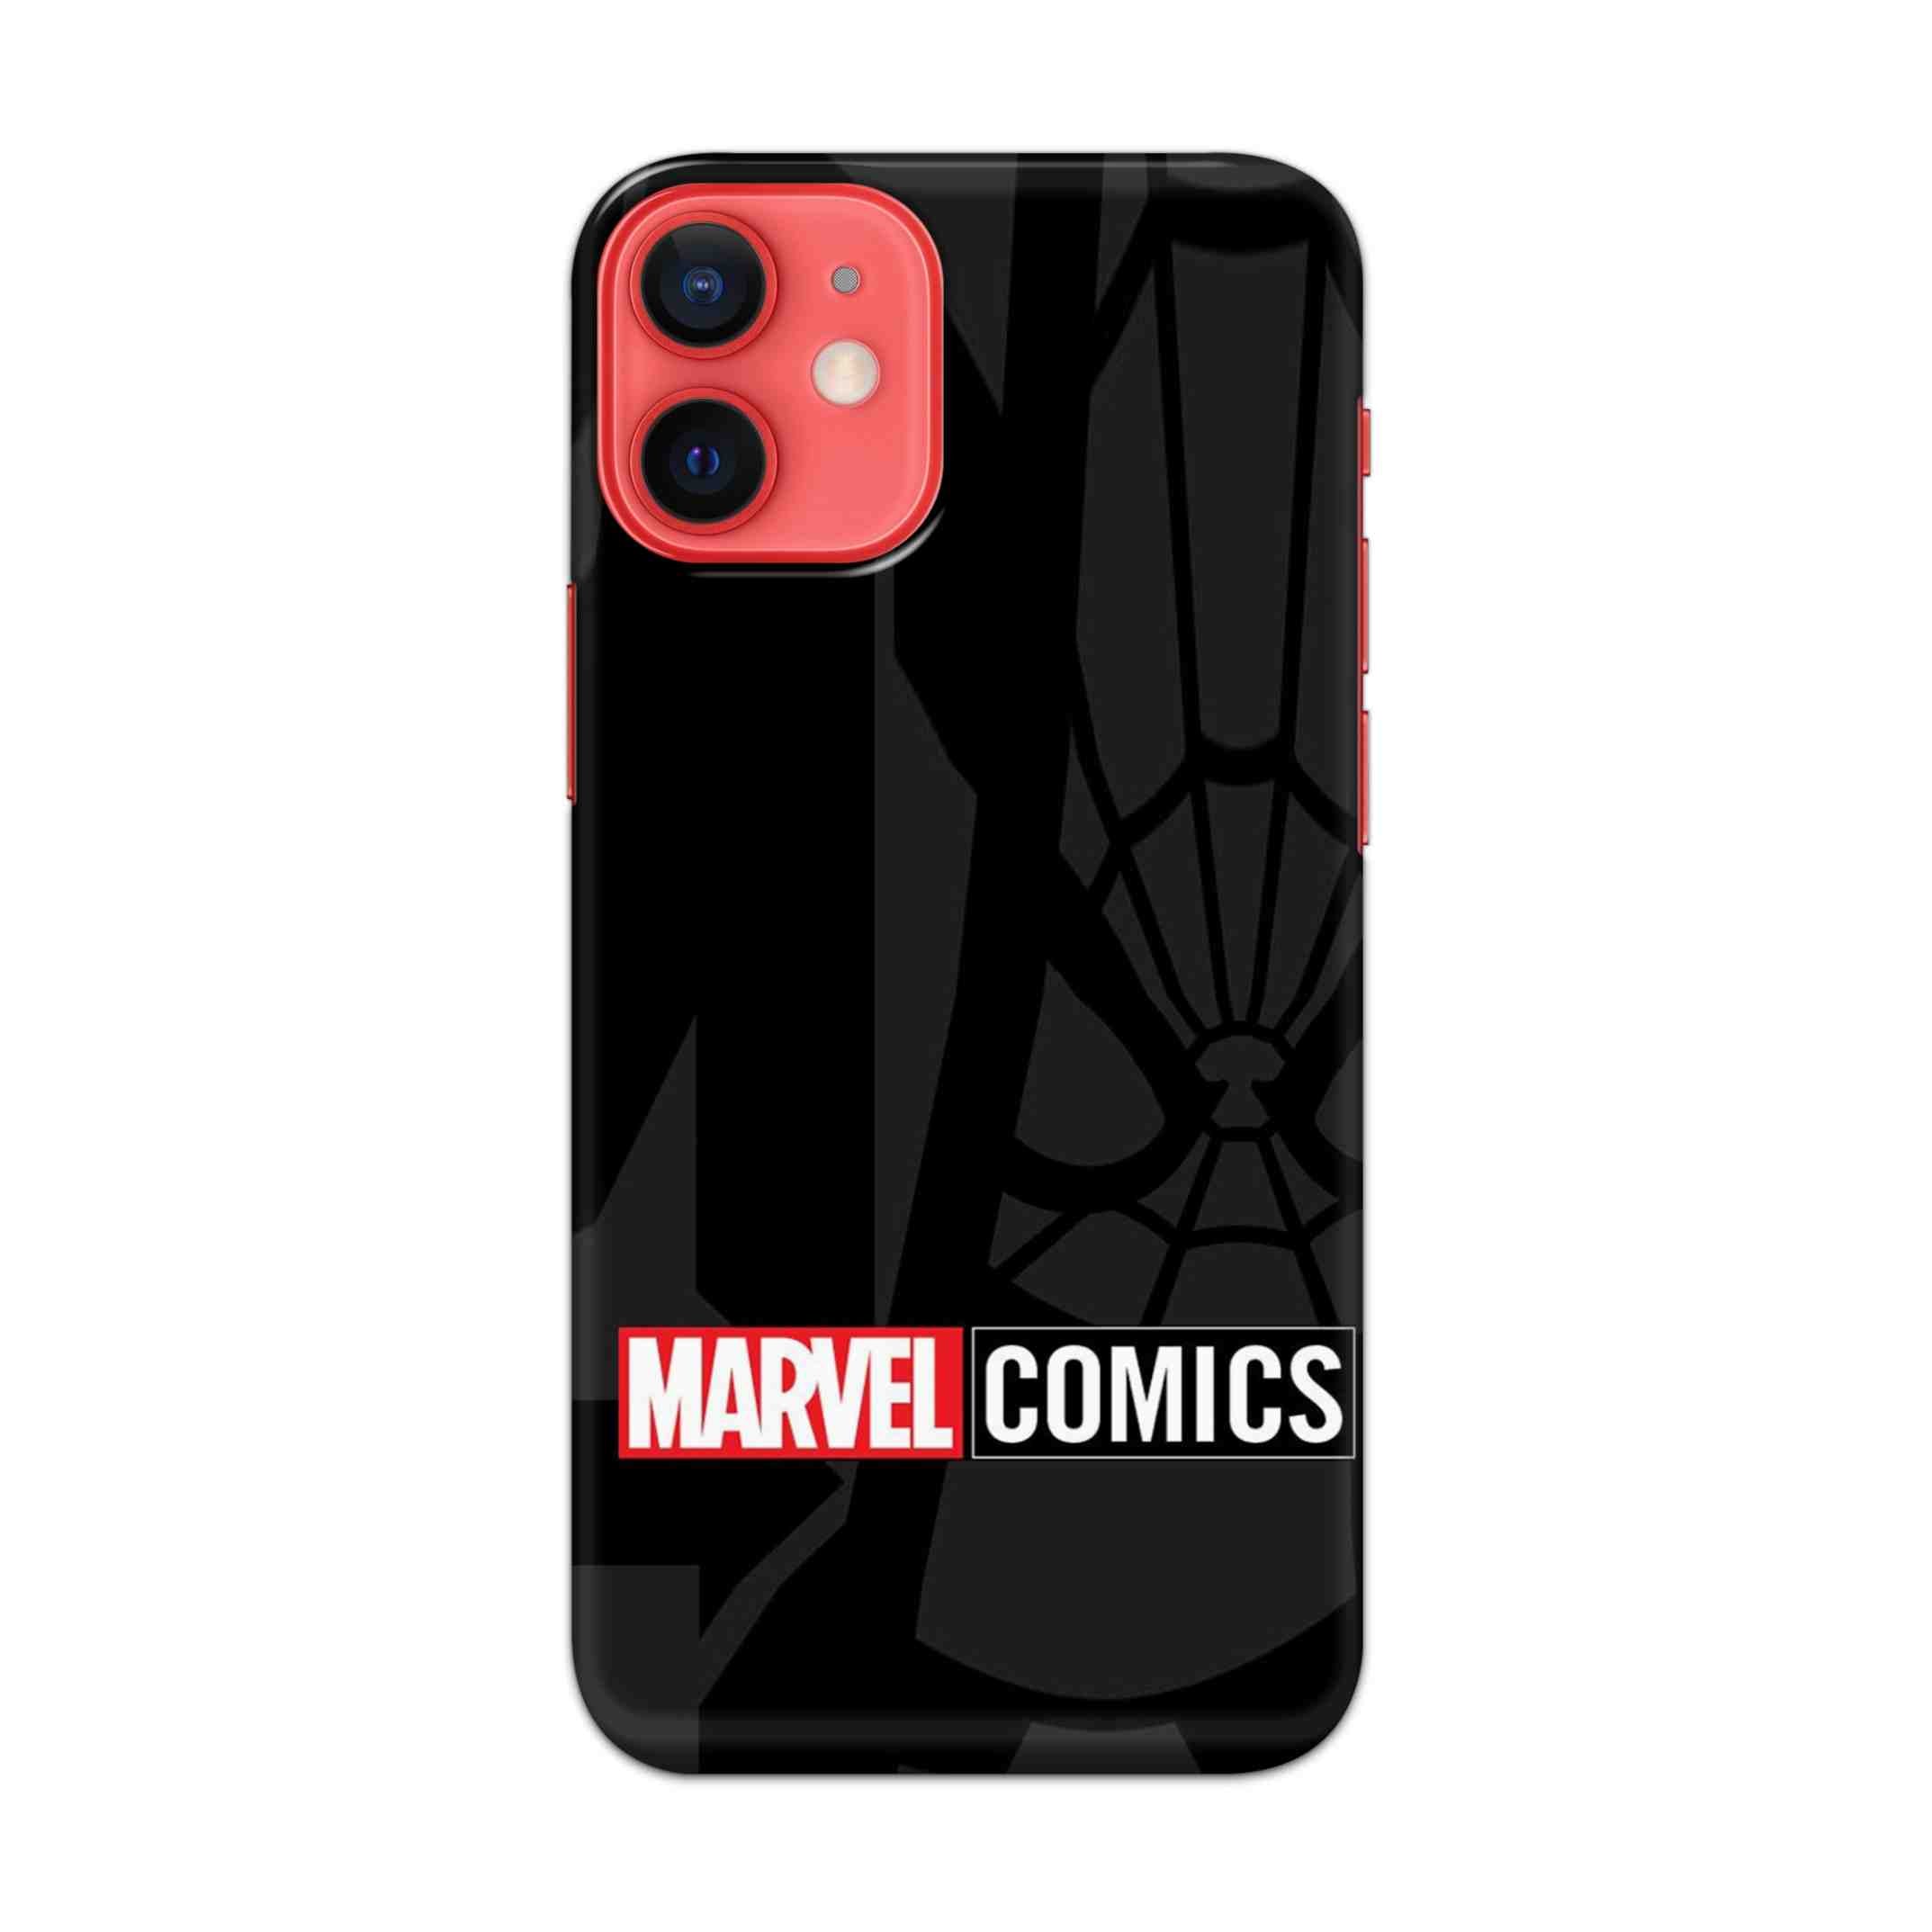 Buy Marvel Comics Hard Back Mobile Phone Case/Cover For Apple iPhone 12 mini Online